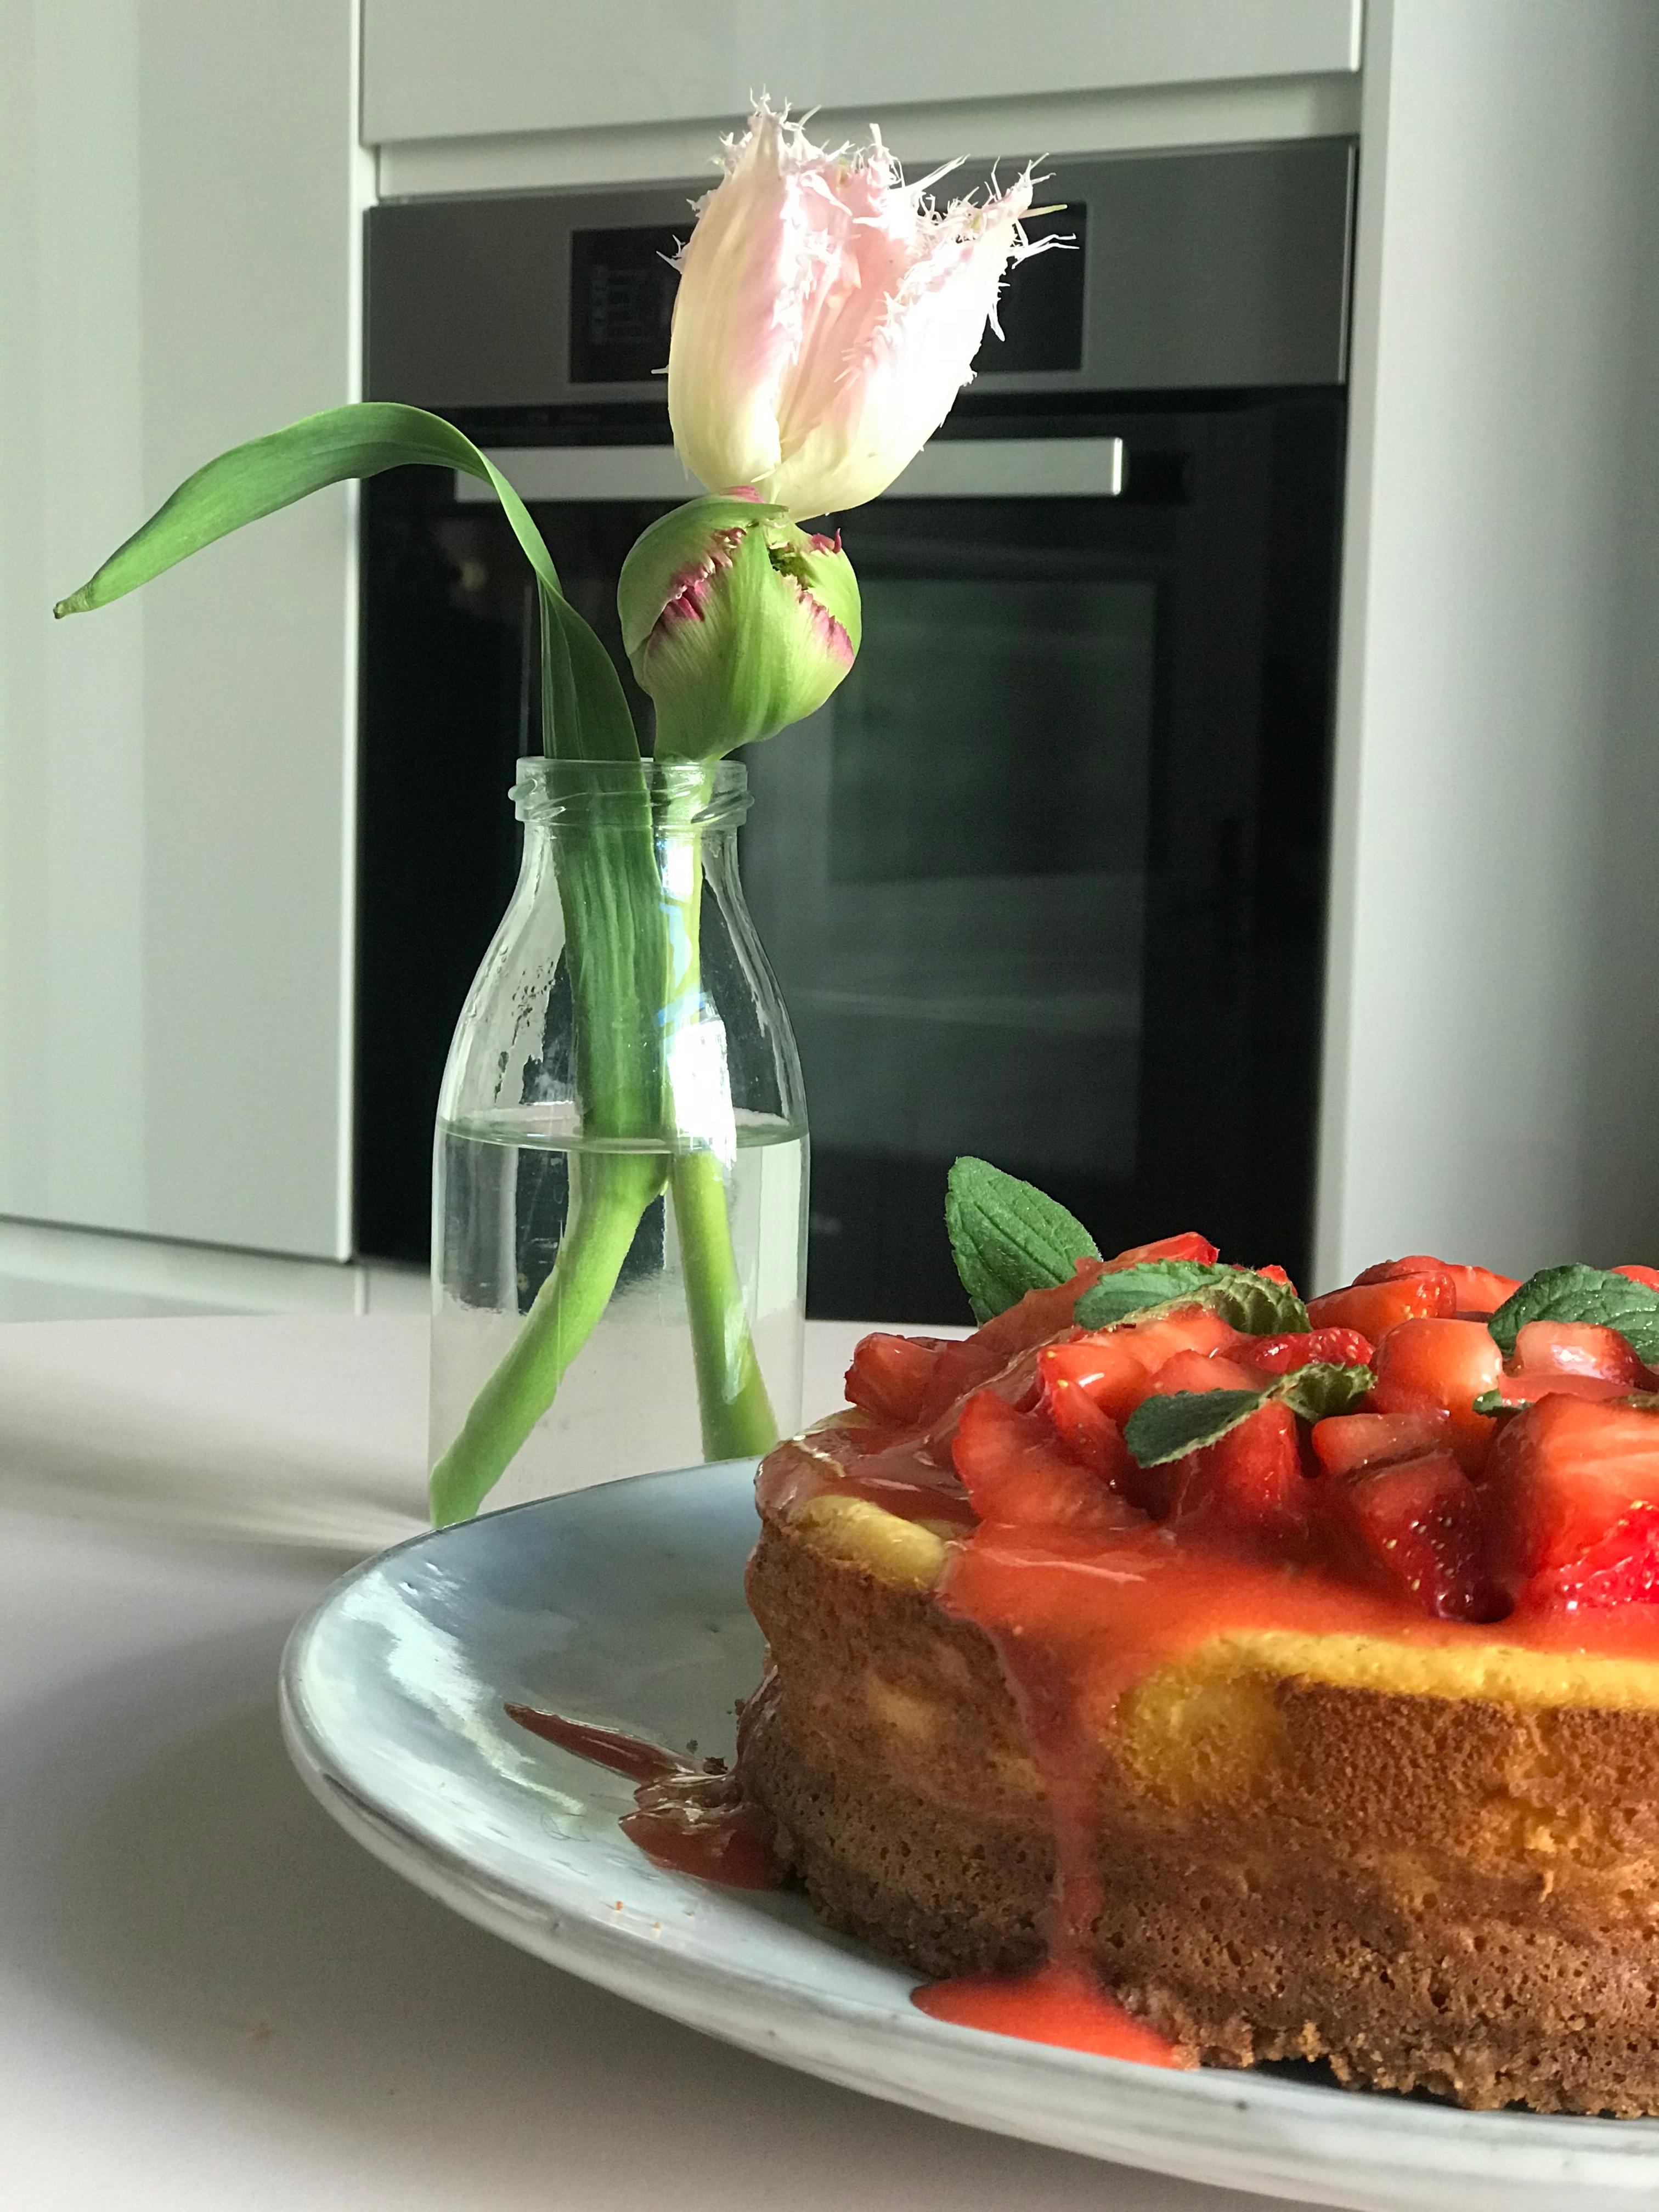 Geht immer! #cake #kuchen #cheesecake #cakelover #couchstyle #flowers #tulpen